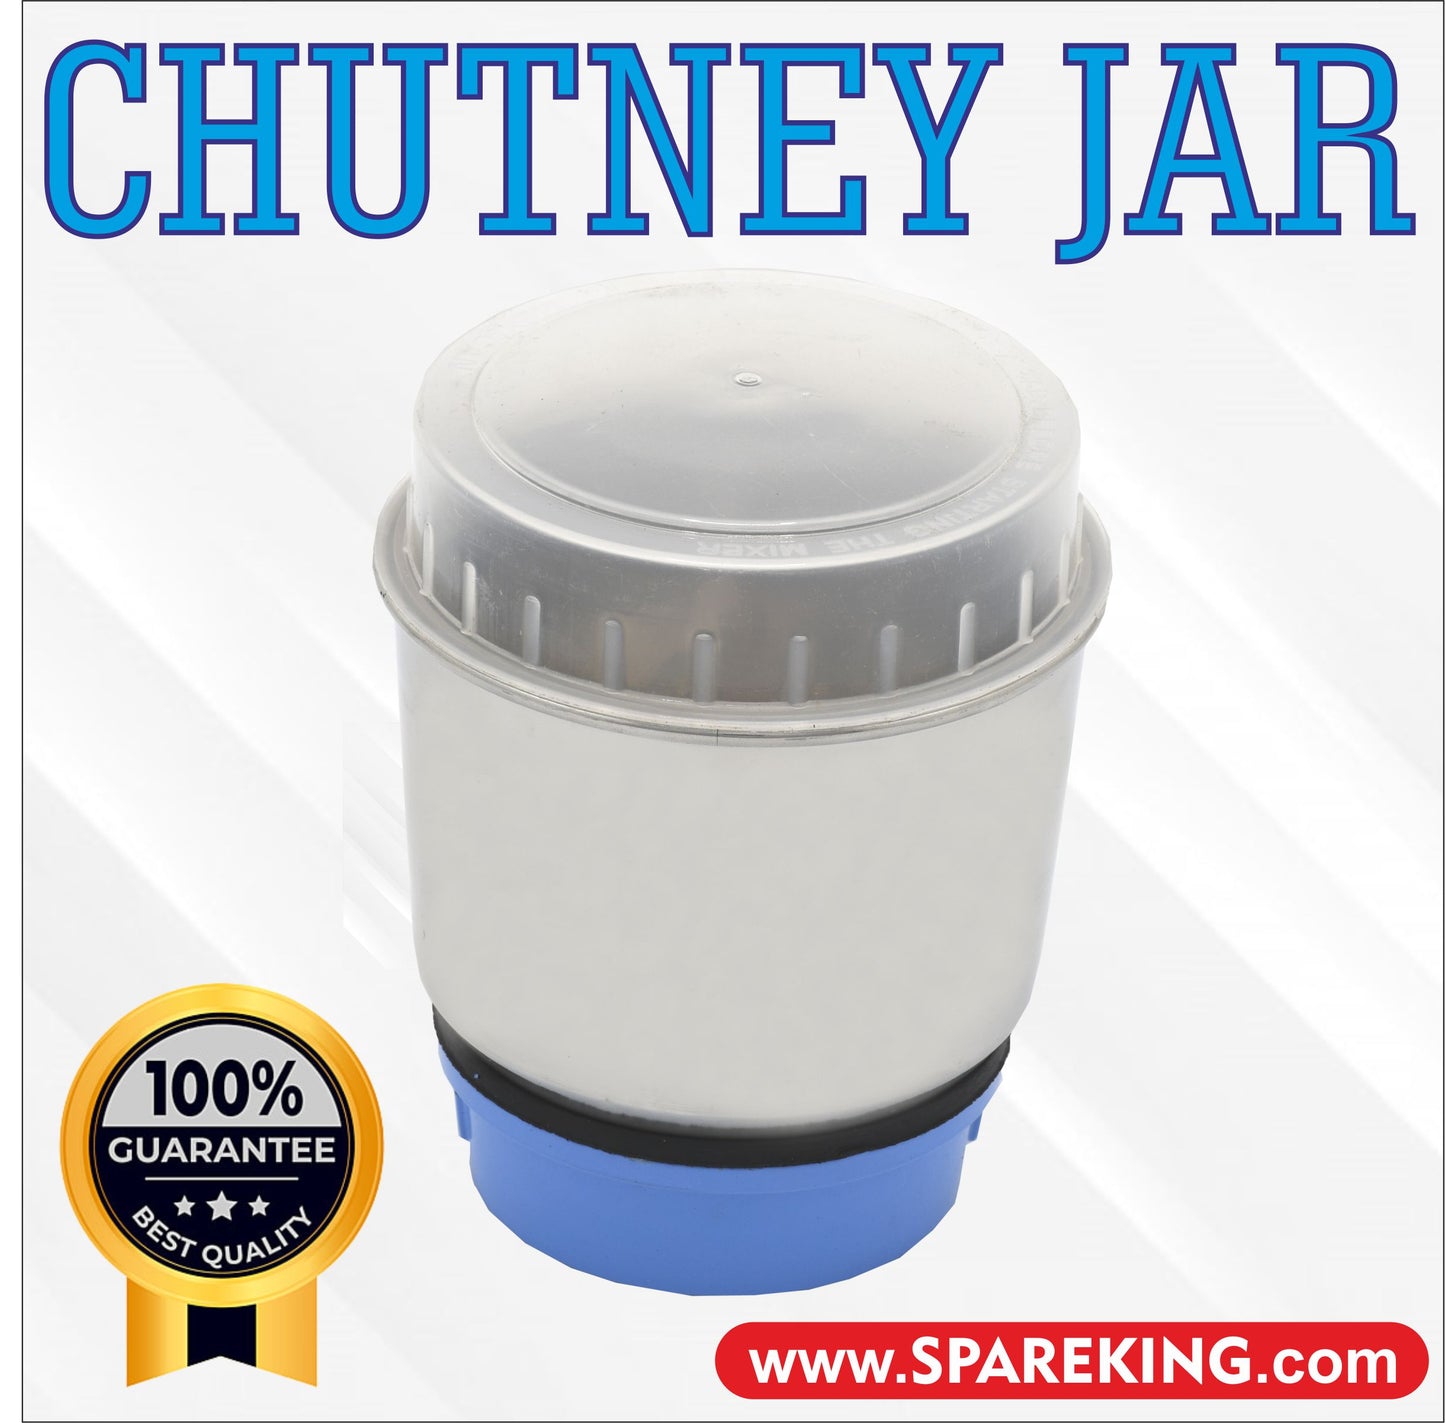 Chutney Jar